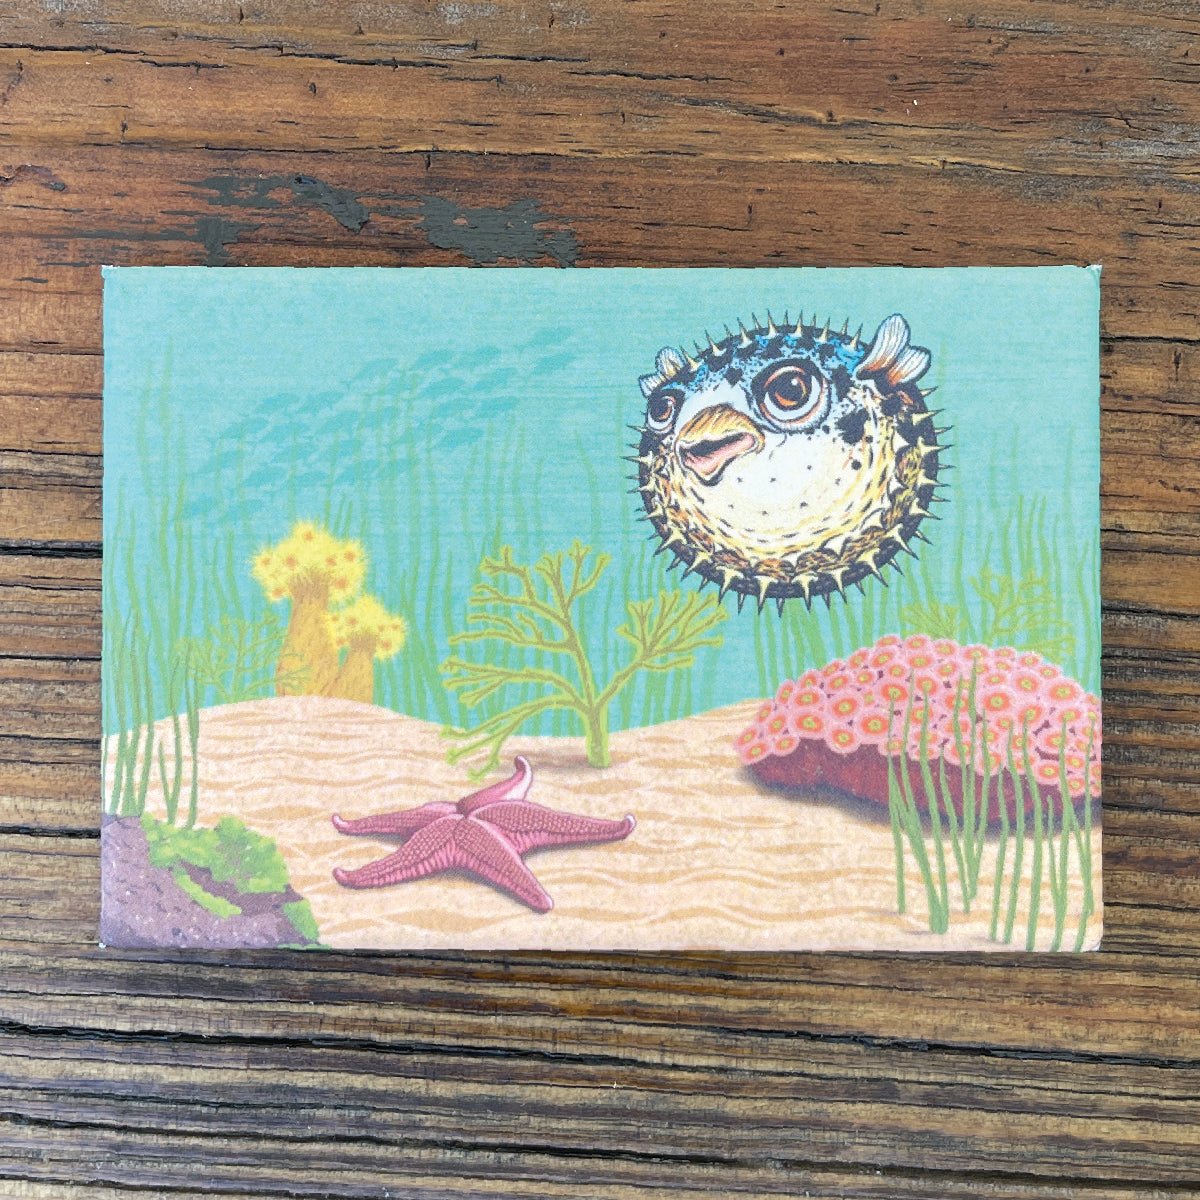 Pufferfish / Blowfish Fridge Magnet - Two Little Fruits